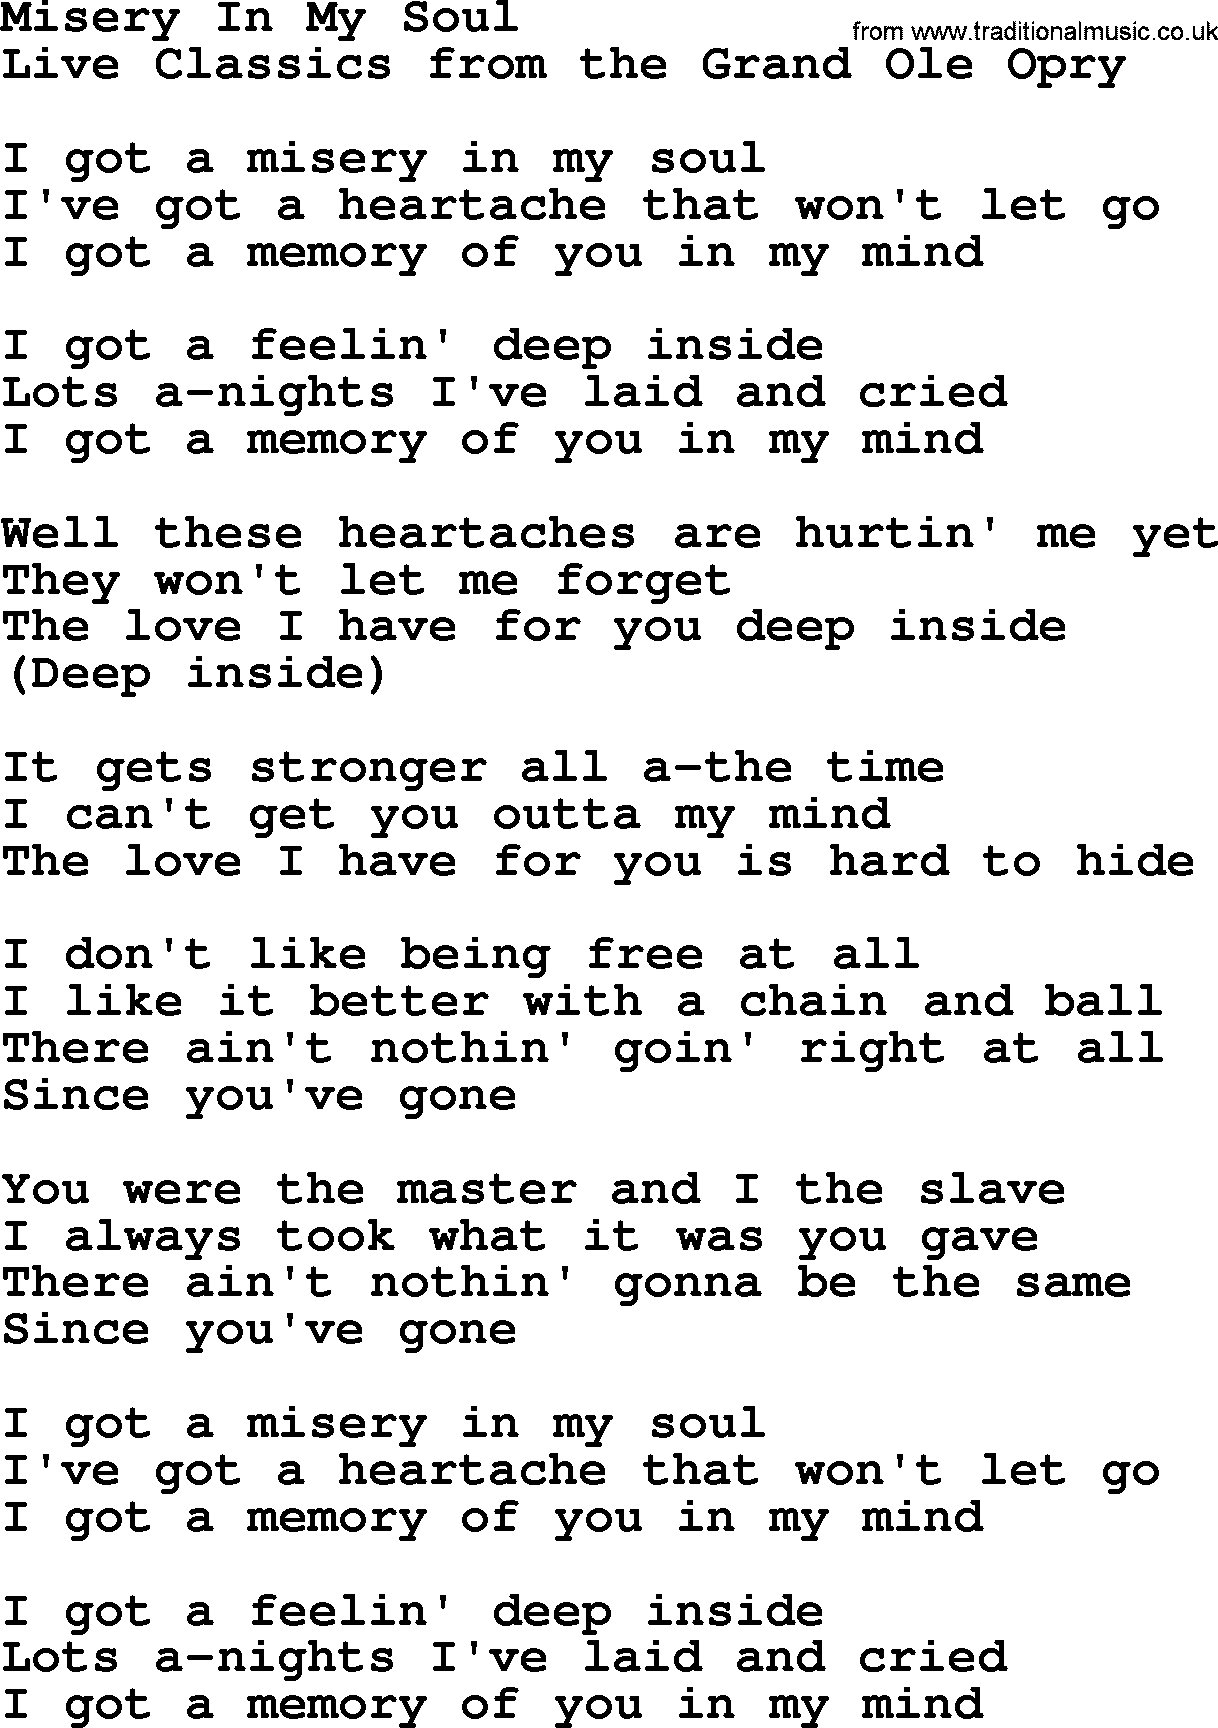 Marty Robbins song: Misery In My Soul, lyrics